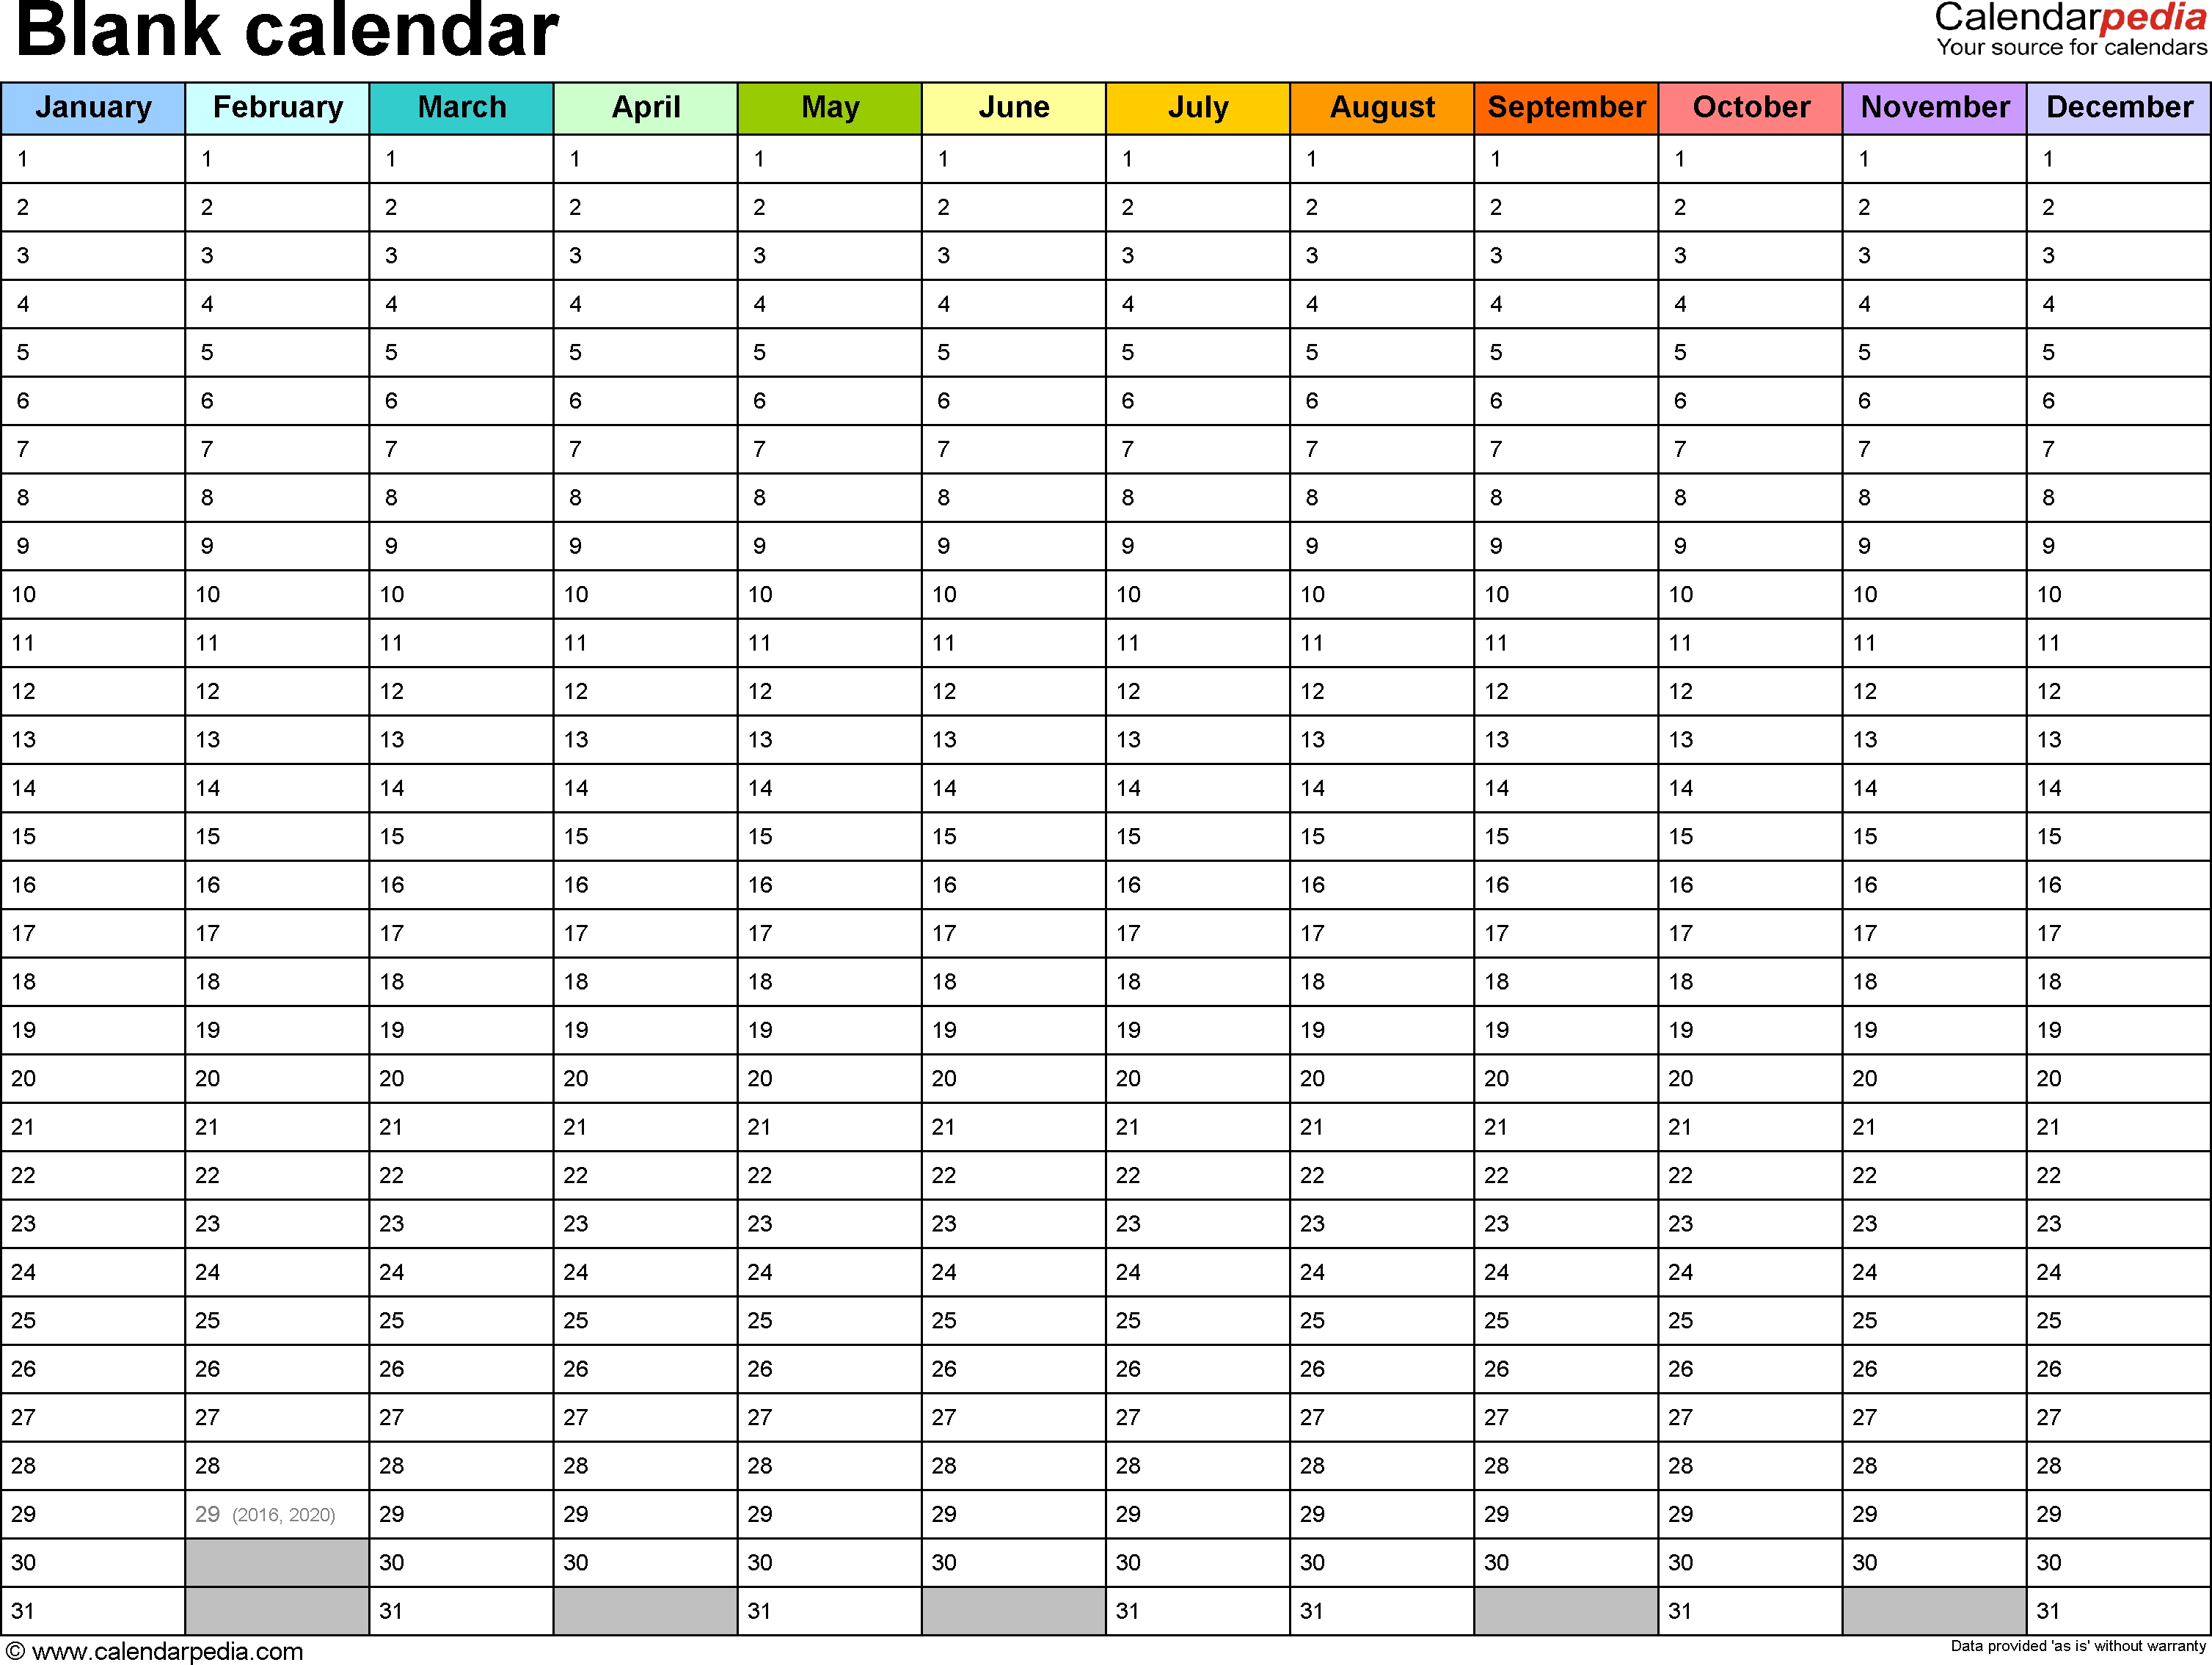 Blank Calendar - 9 Free Printable Microsoft Word Templates for Blank 12 Month Calendar Page